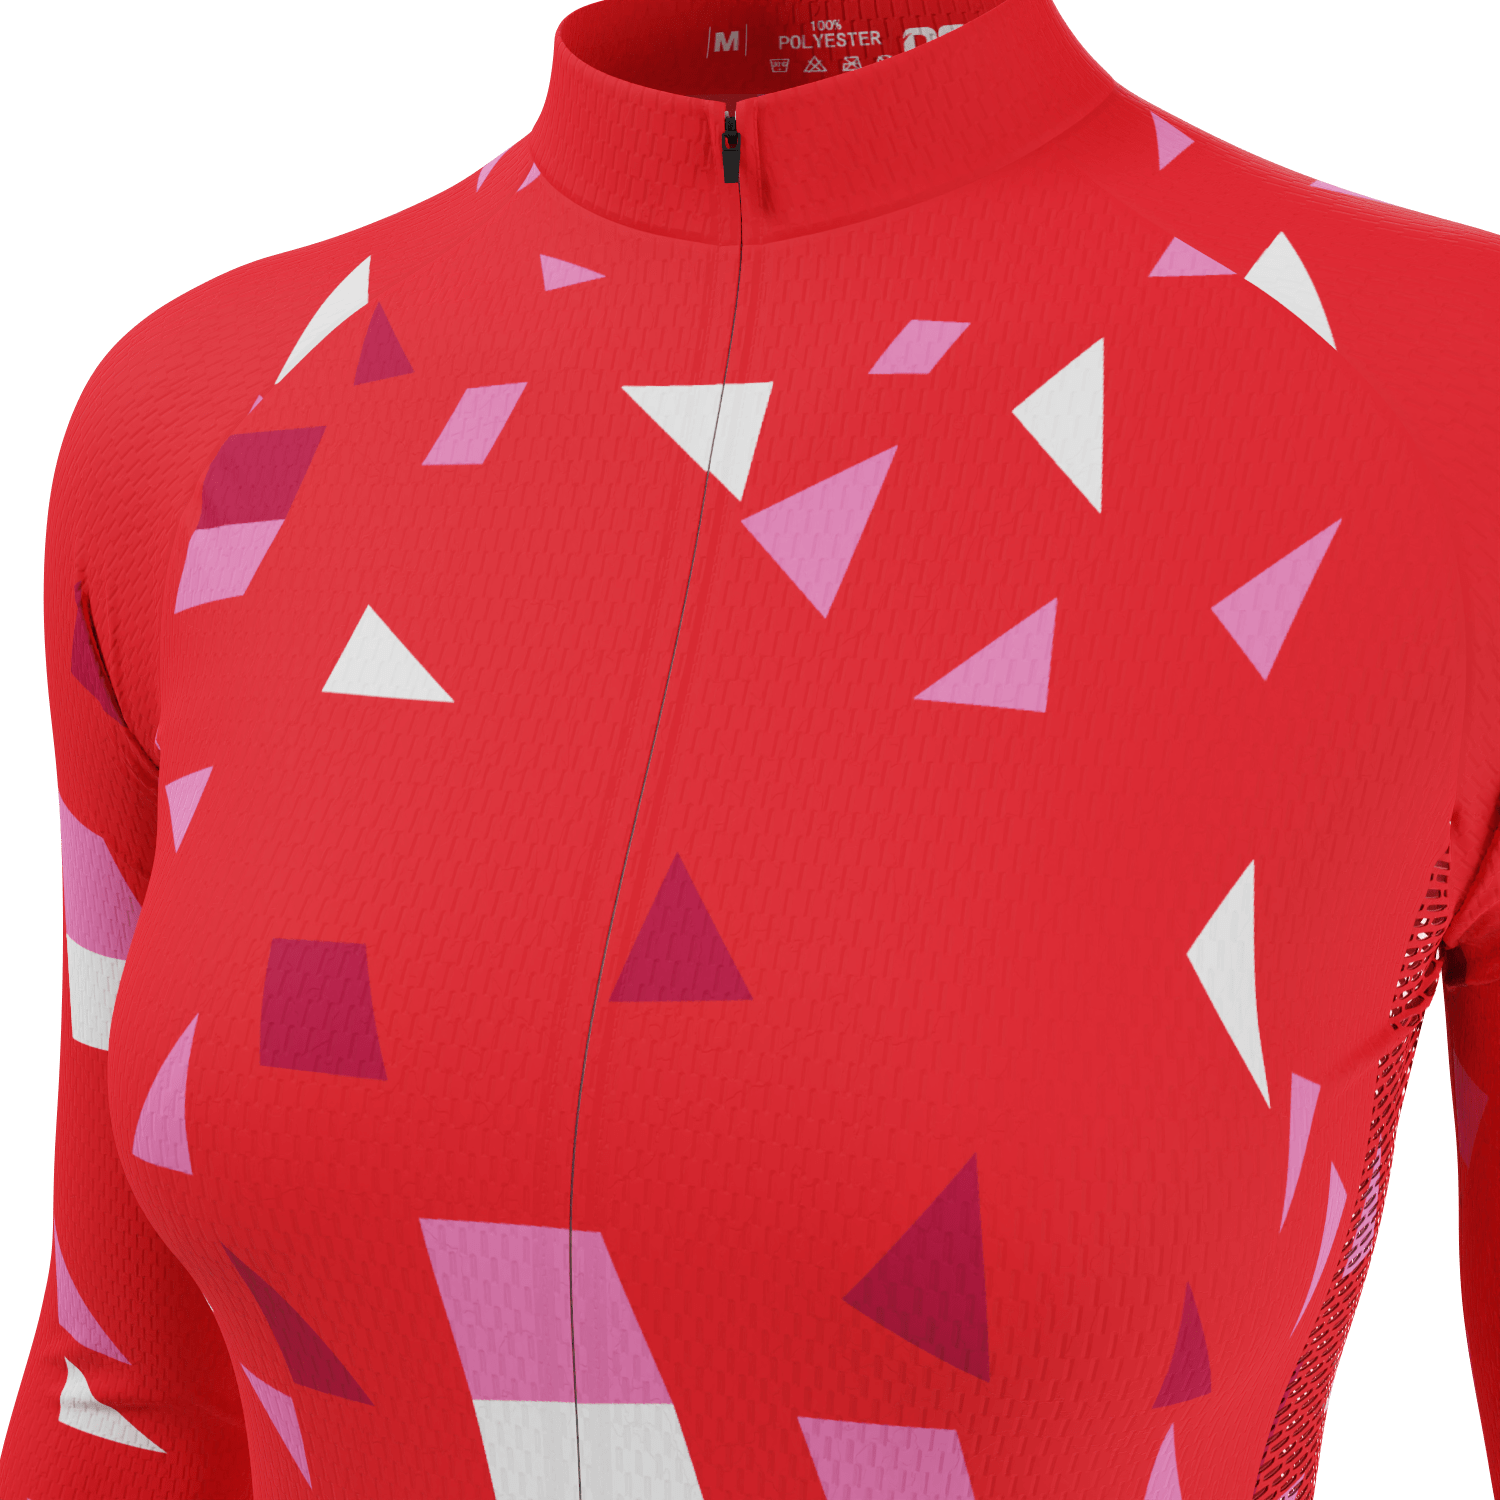 Women's Bold Confetti Long Sleeve Cycling Jersey